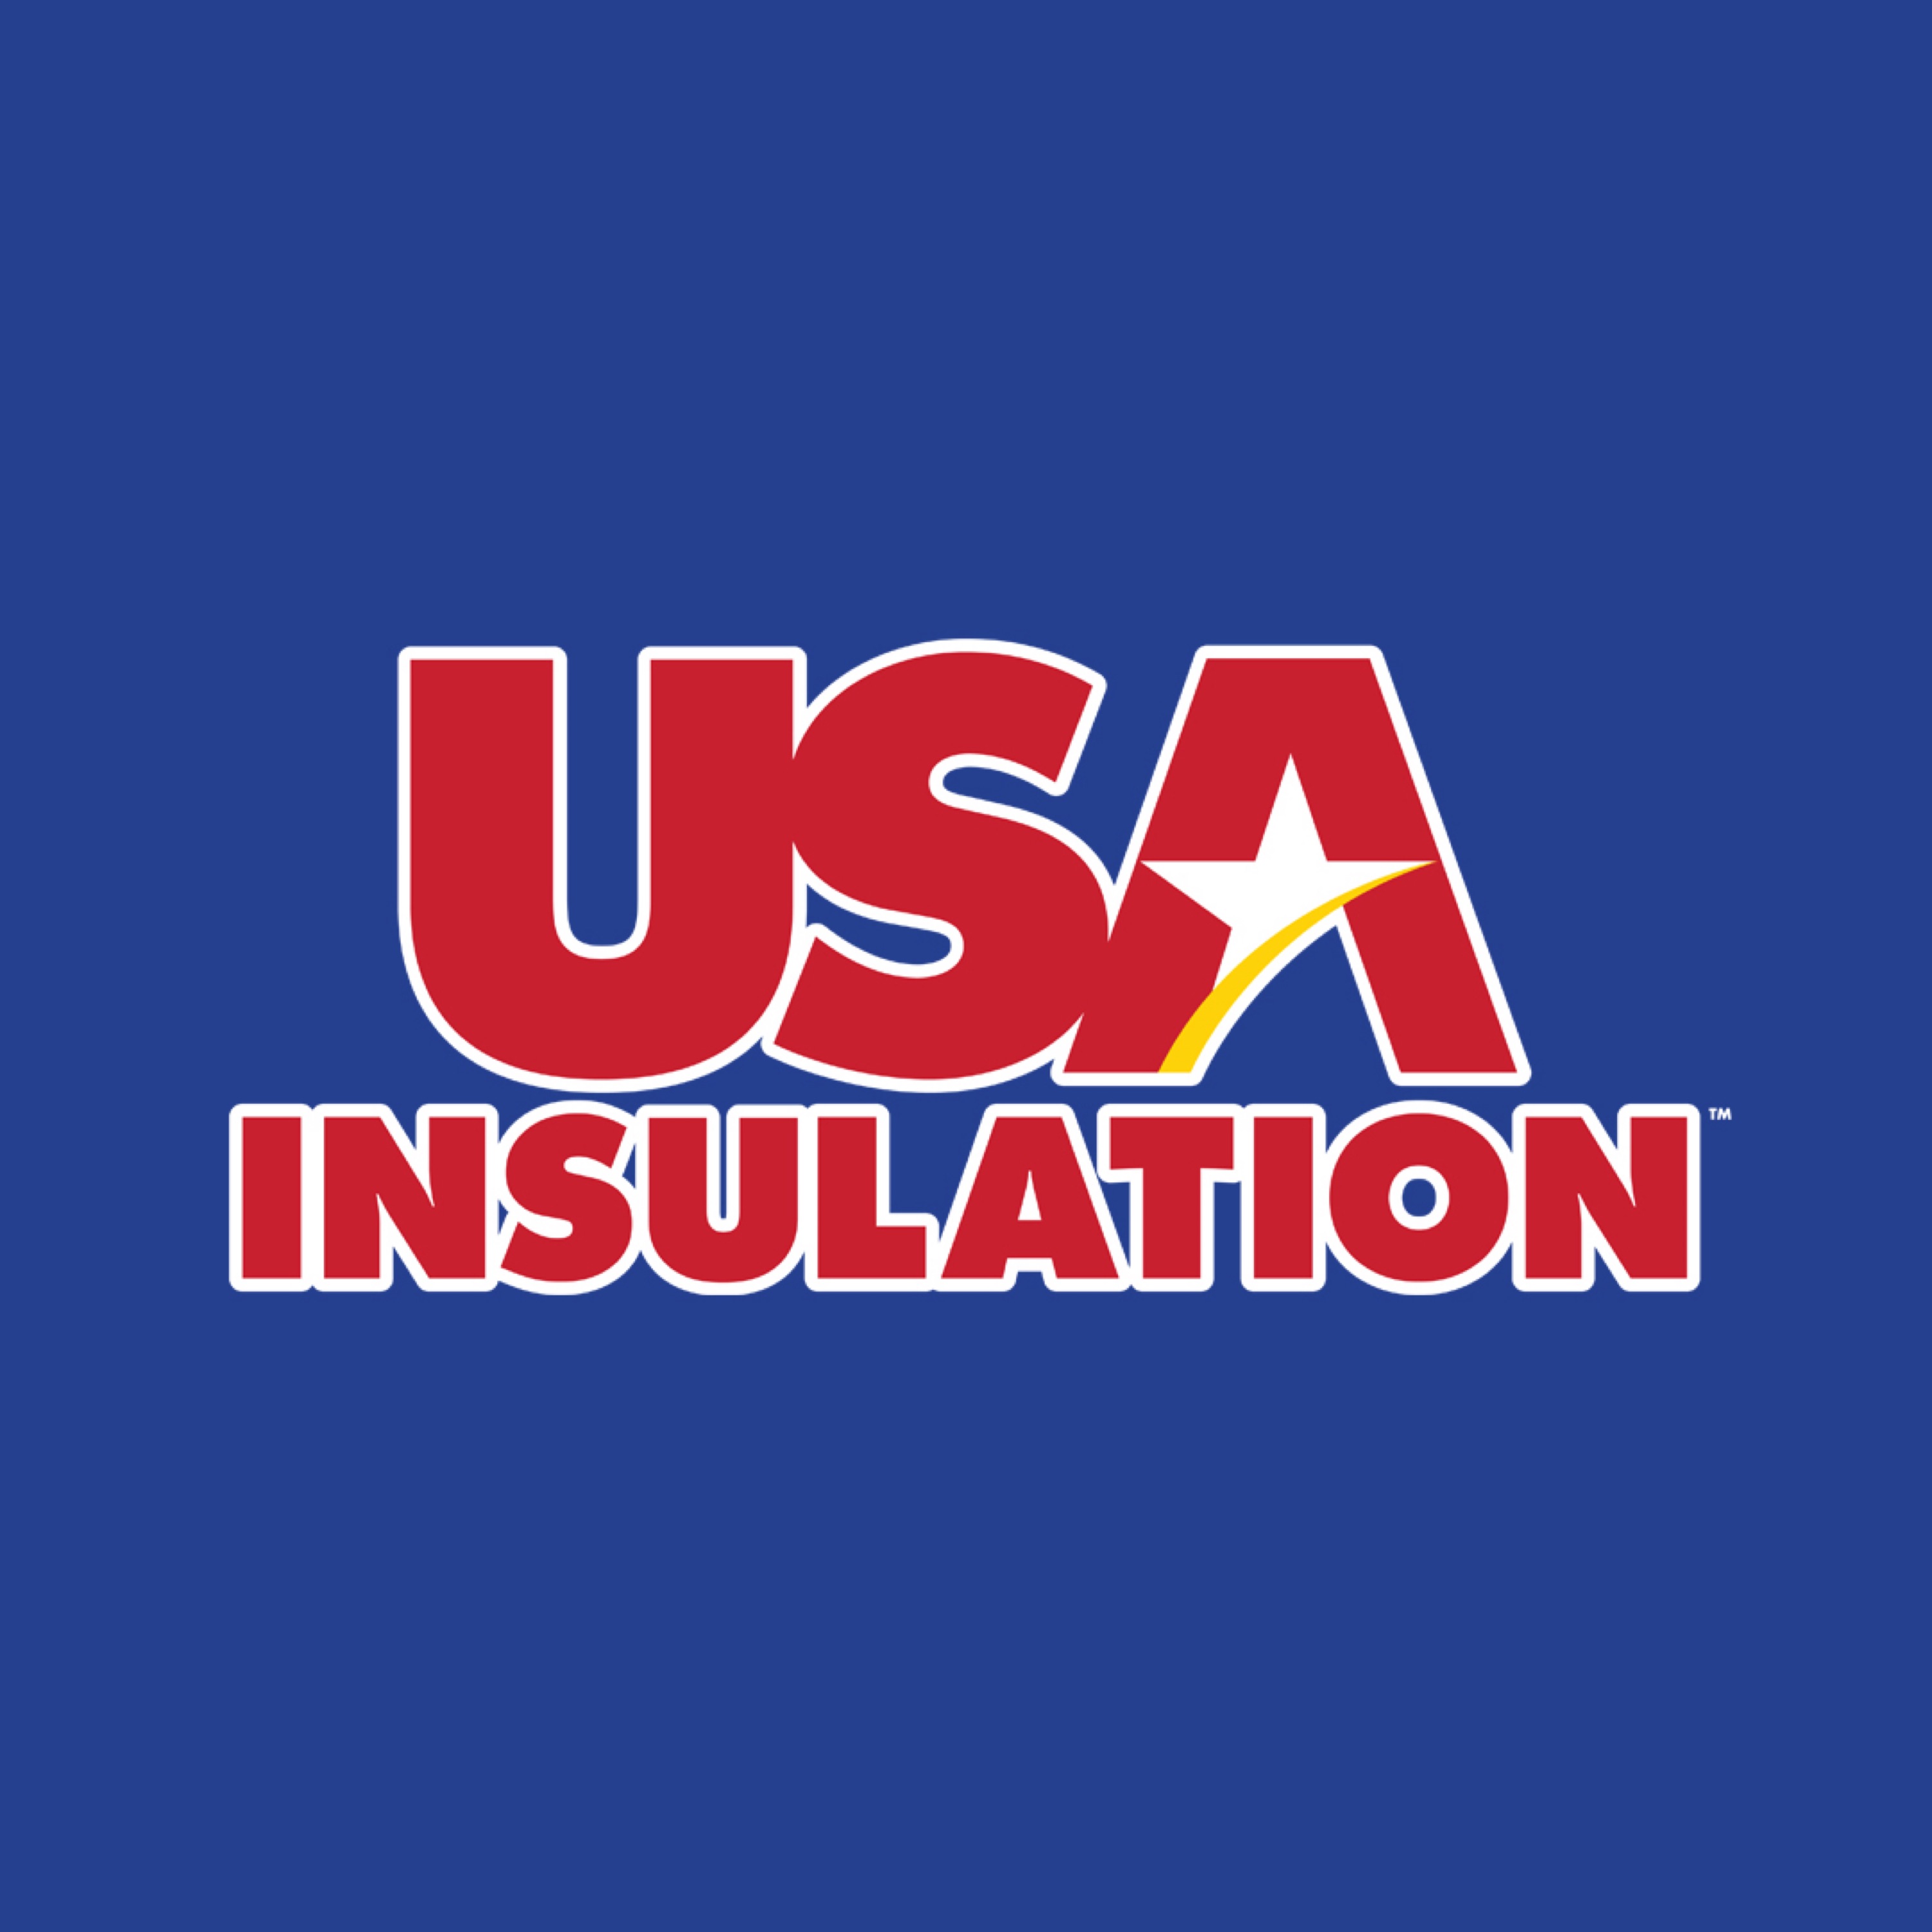 USA Insulation of Austin Logo